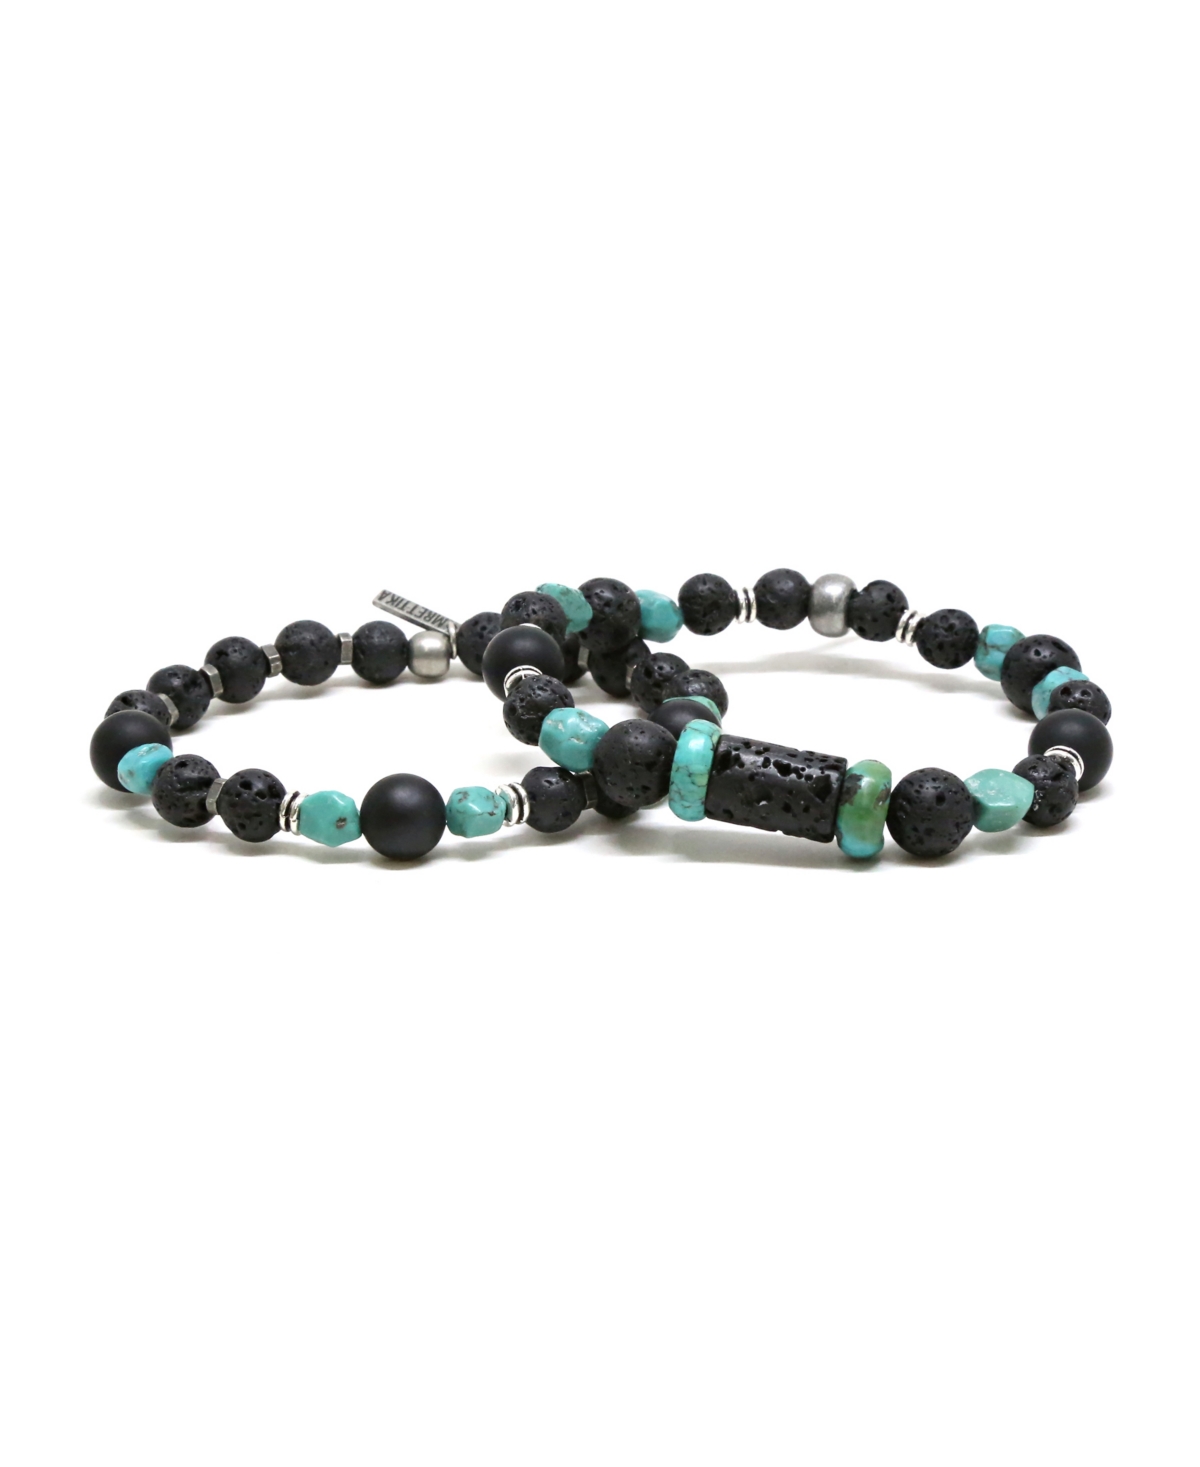 Raw Lava Stone and Turquoise Elastic Beaded Bracelet, Pack of 2 - Multi